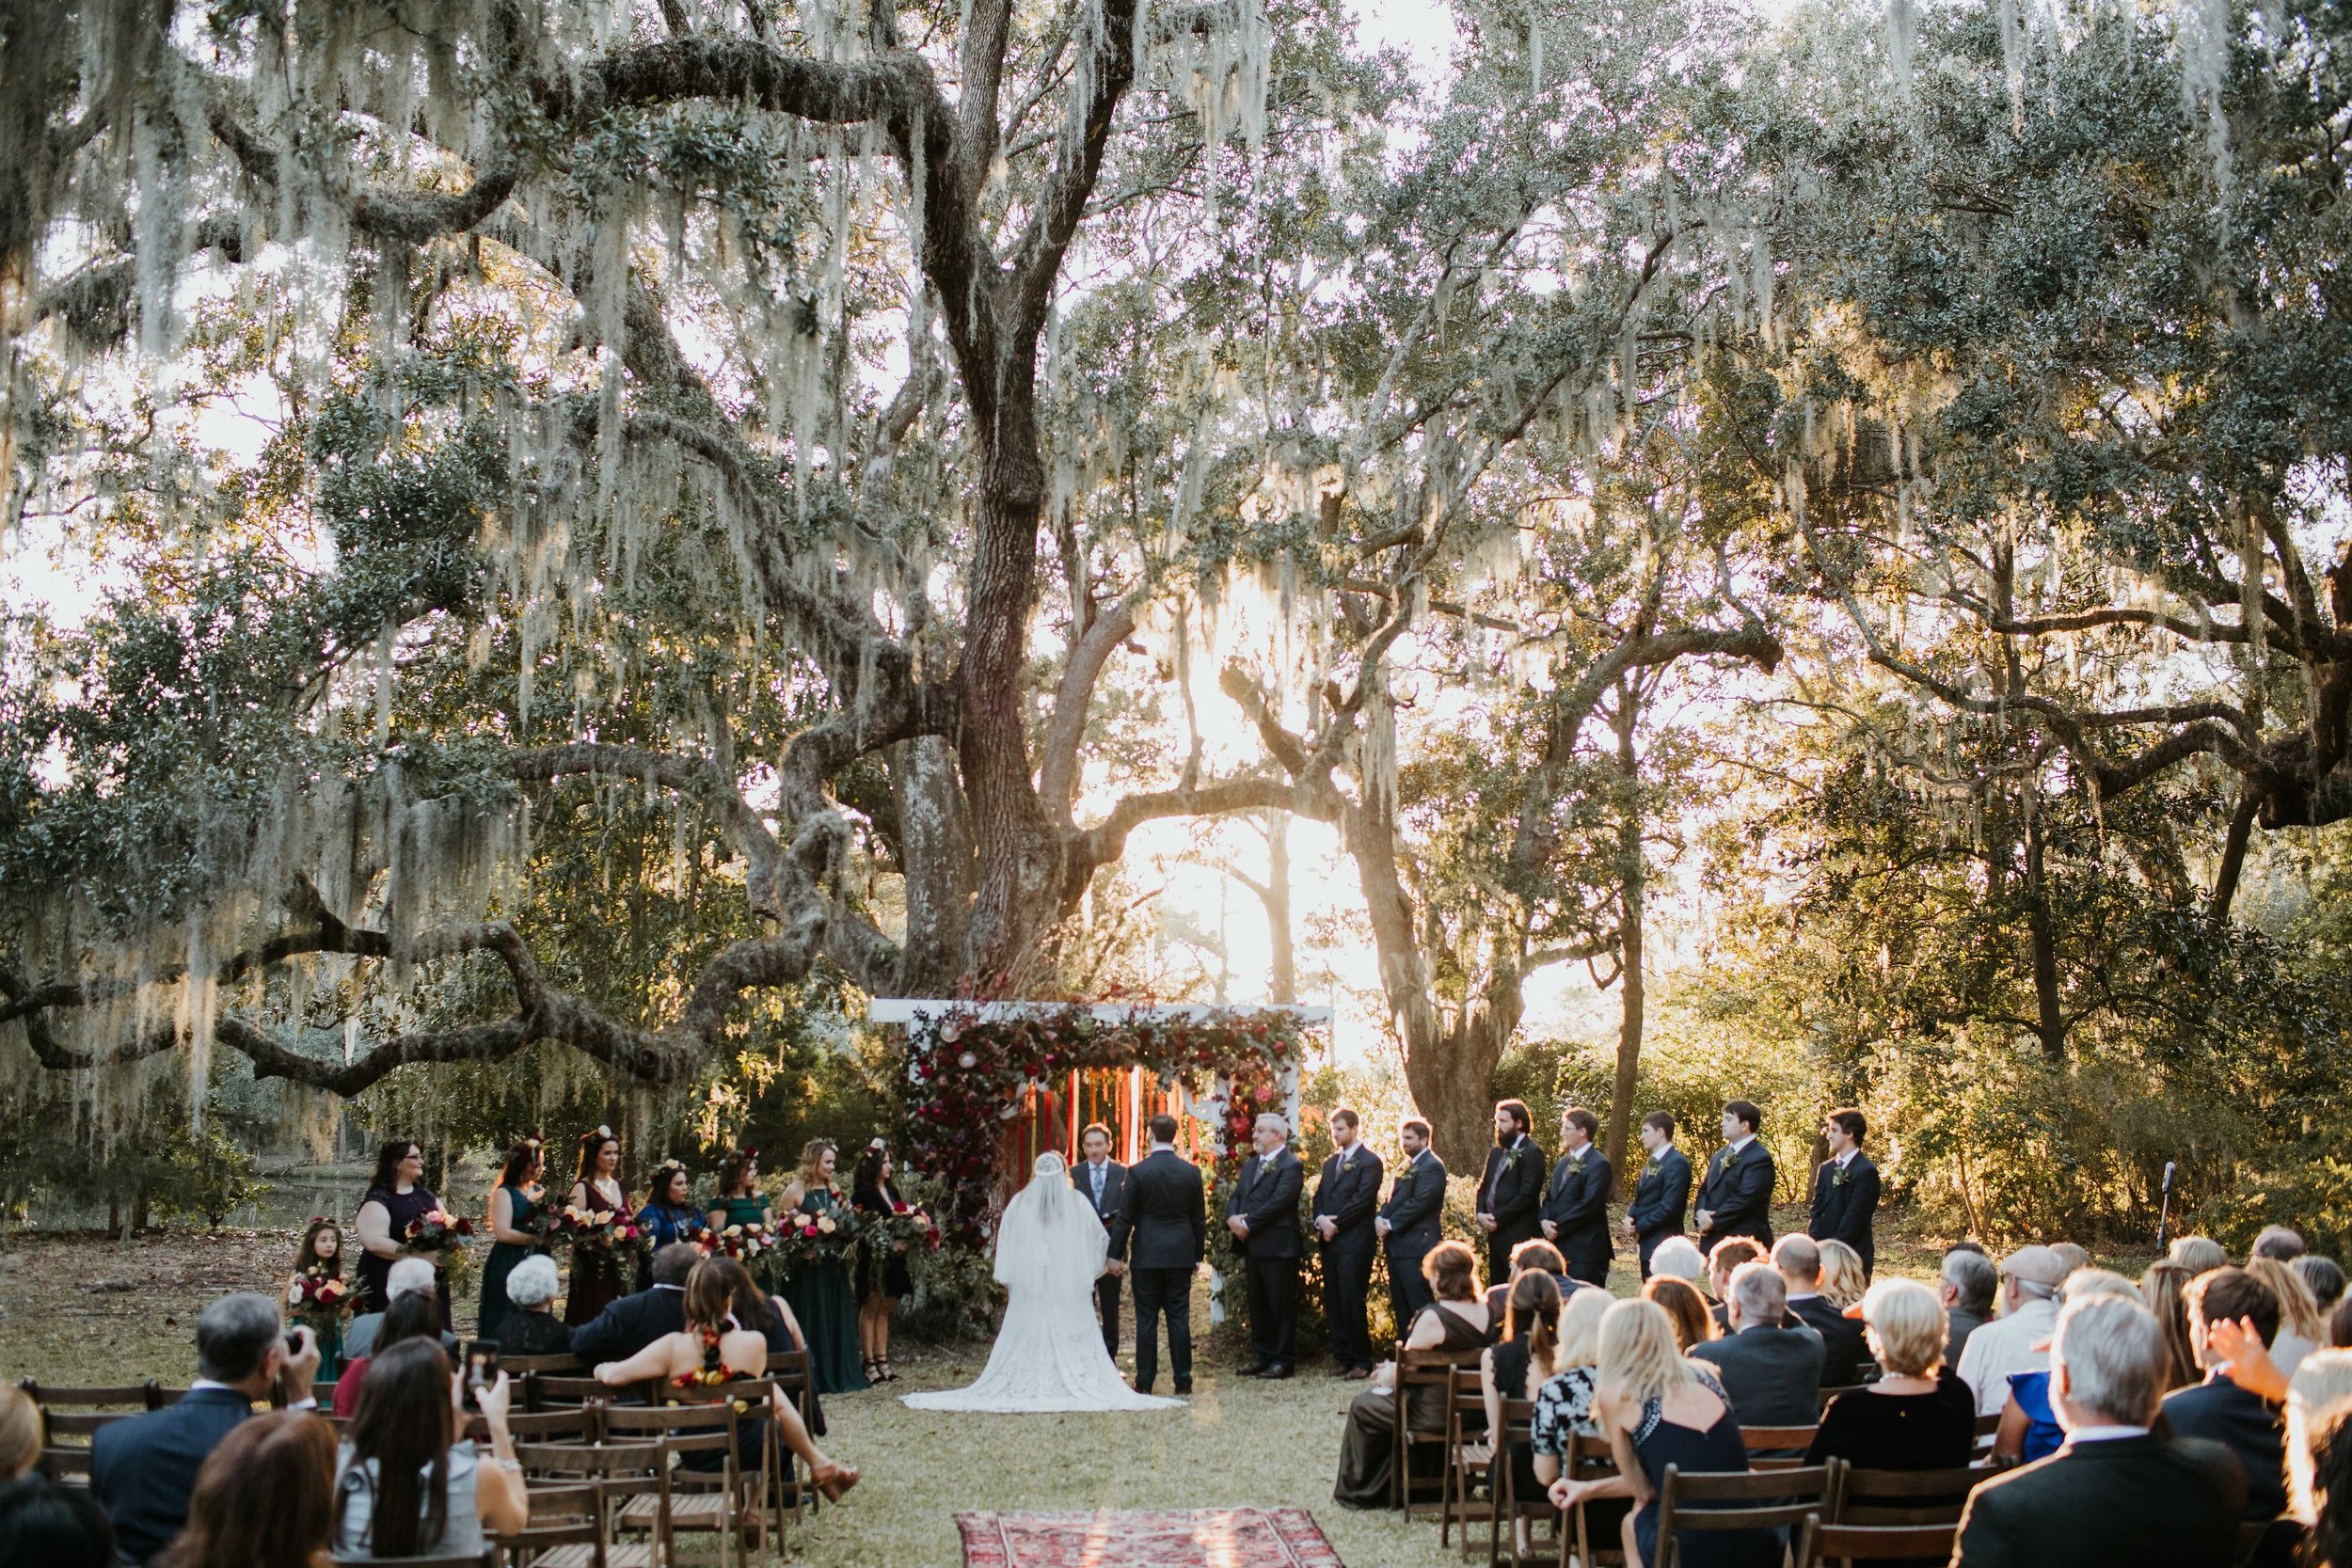 Blog — A Lowcountry Wedding Blog & Magazine - Charleston, Savannah